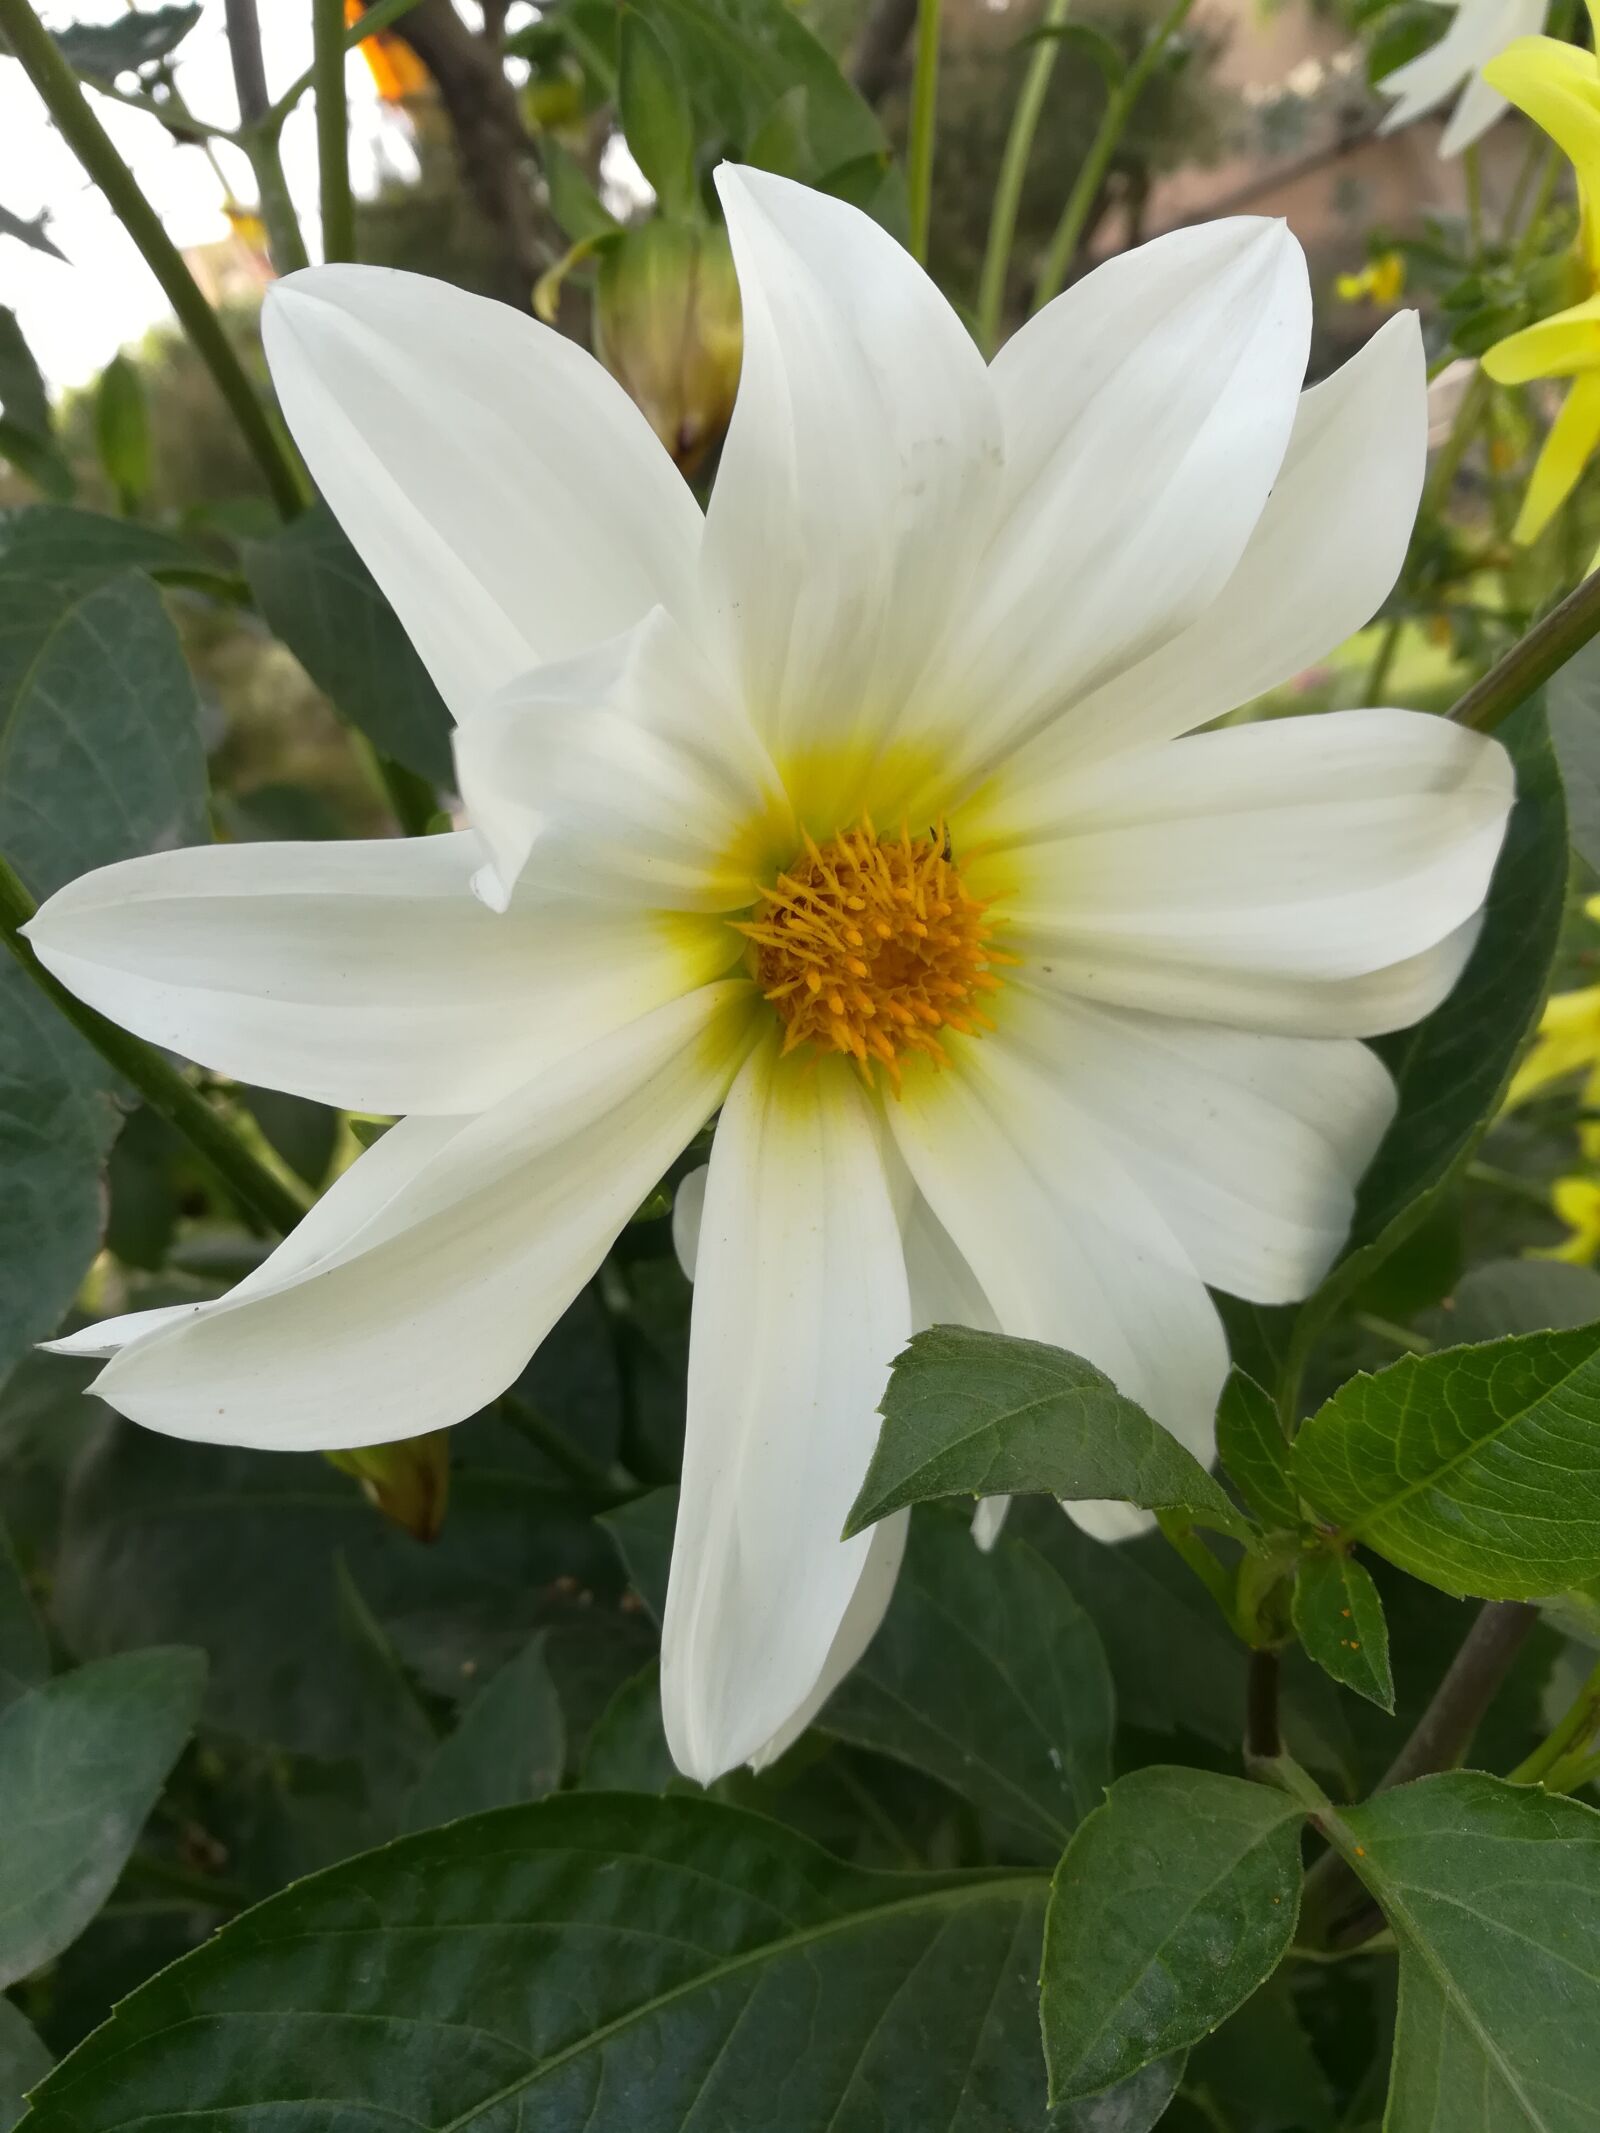 HUAWEI honor 6x sample photo. Beautiful white flower, harmony photography